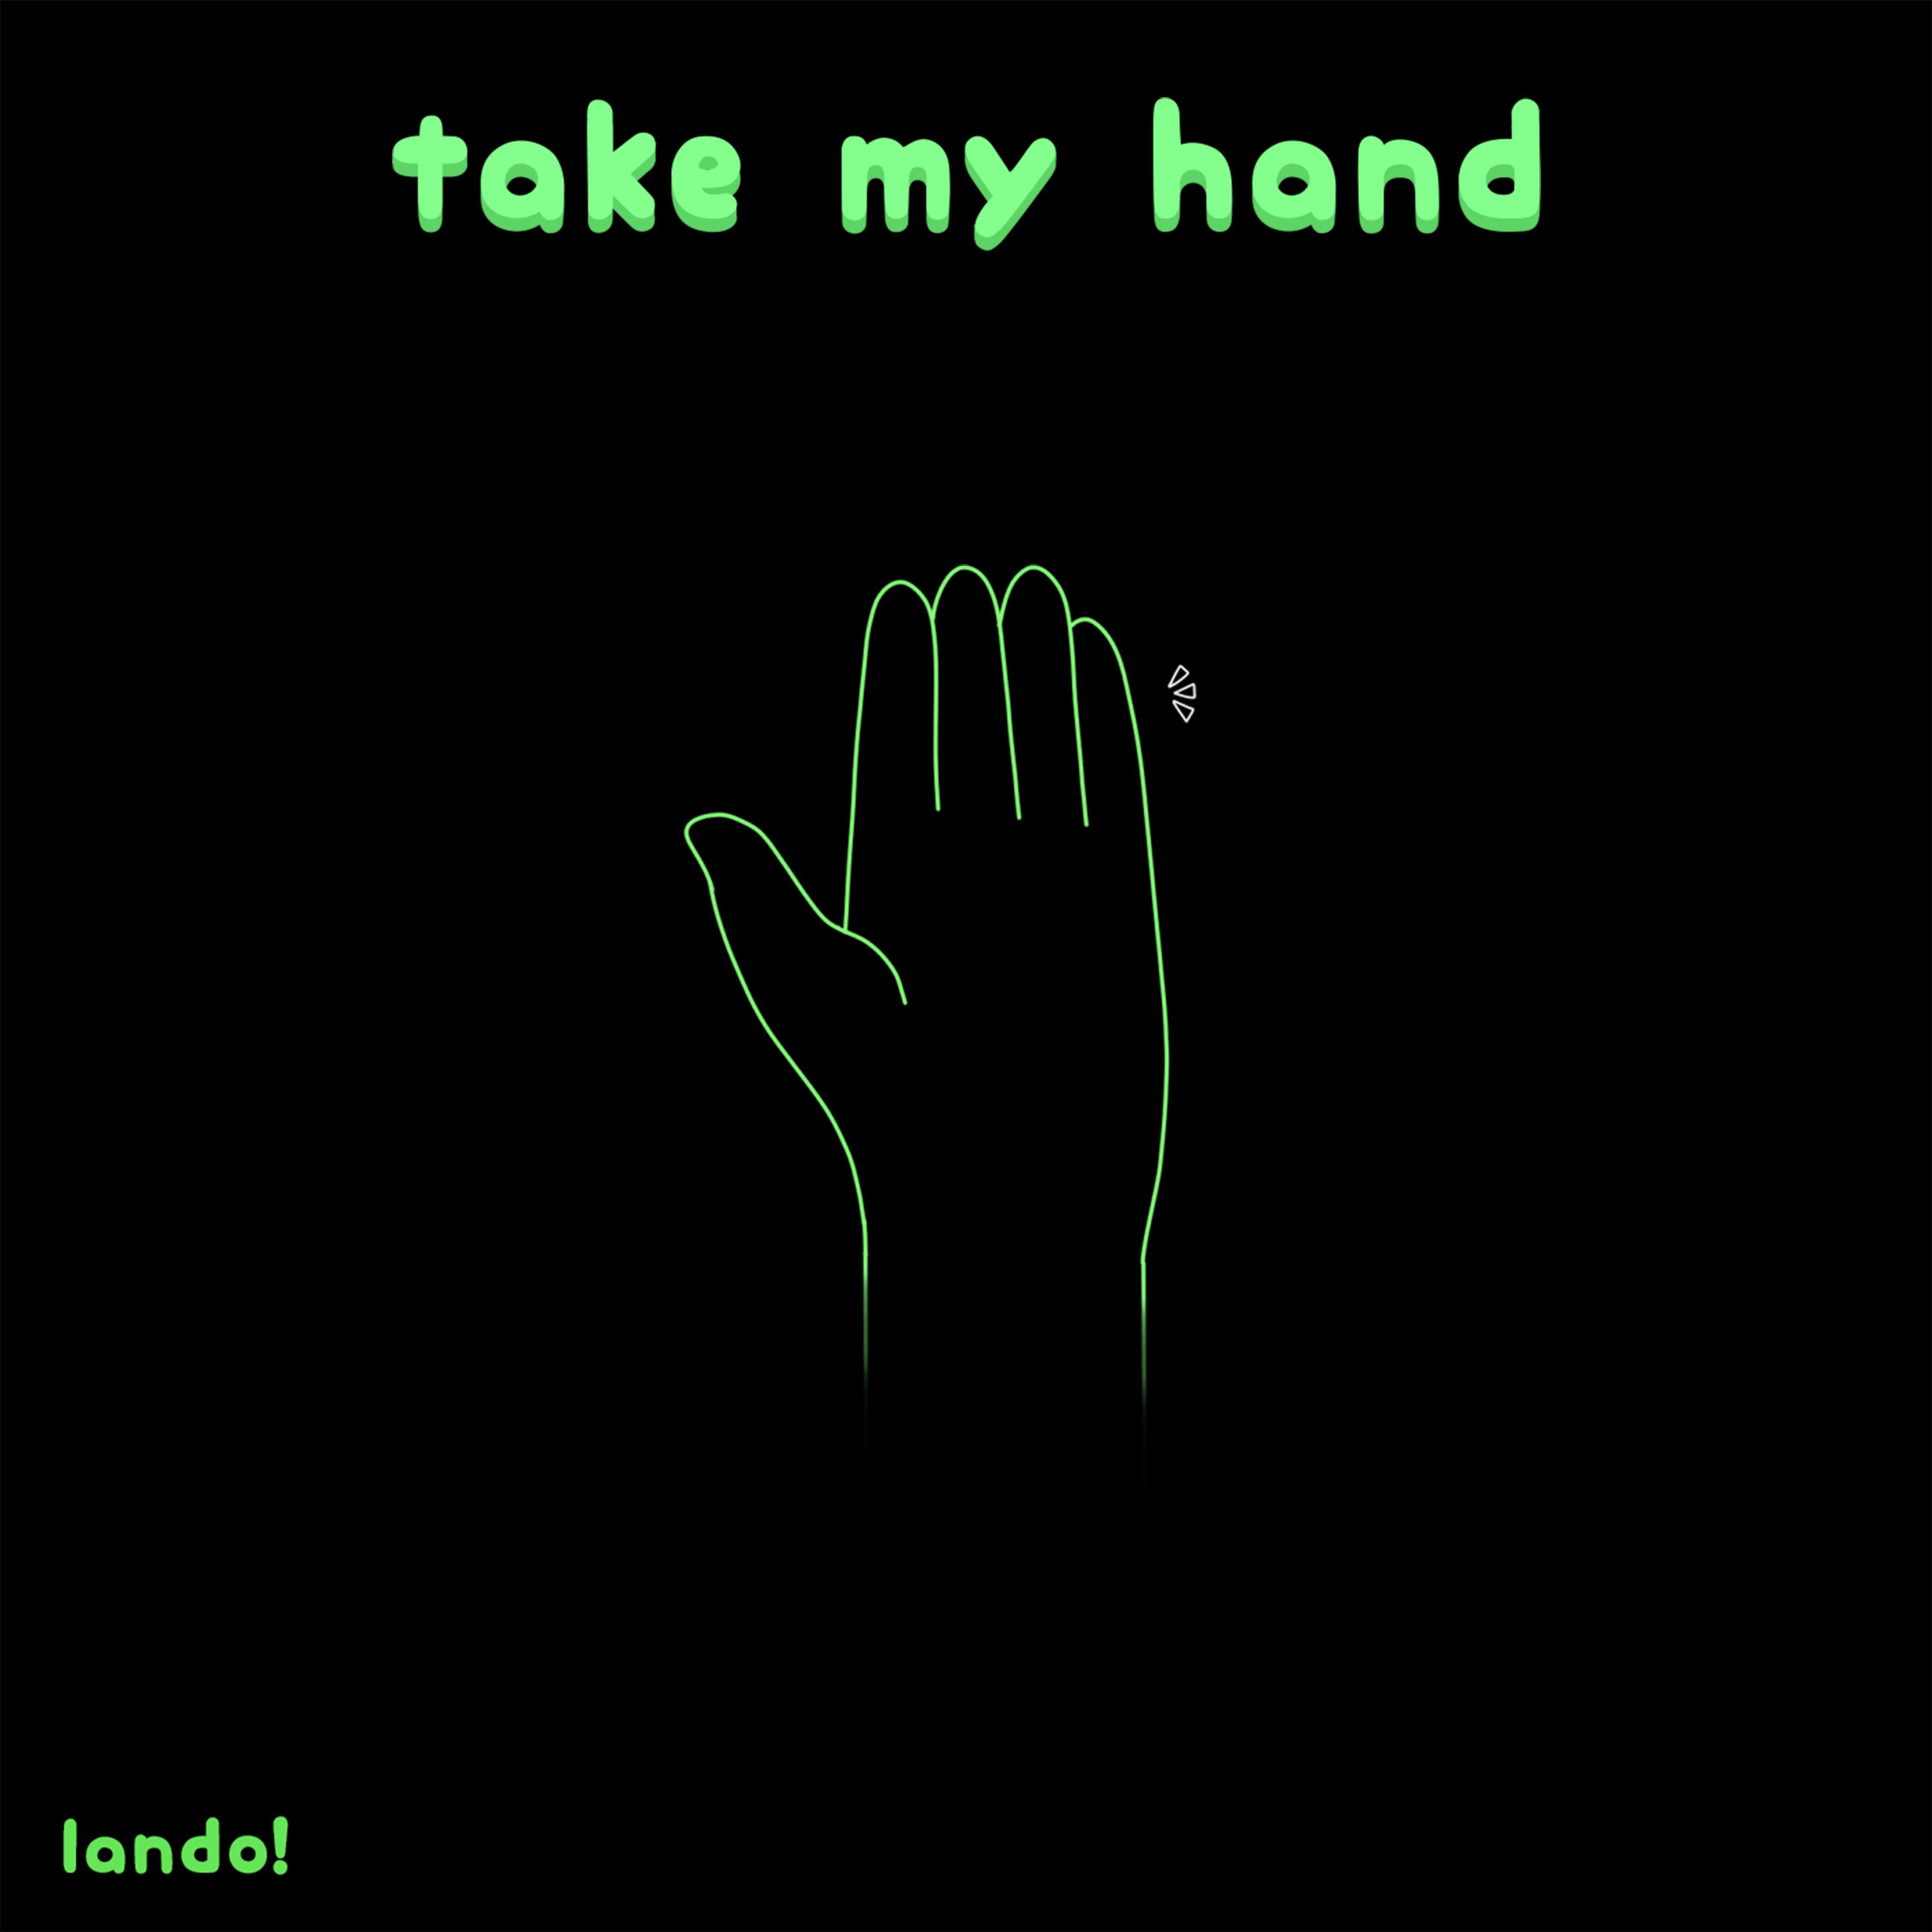 Can take my hand. Take my hand. Take my hand песня. You take my hand песня. Take my hand Windows картинки.